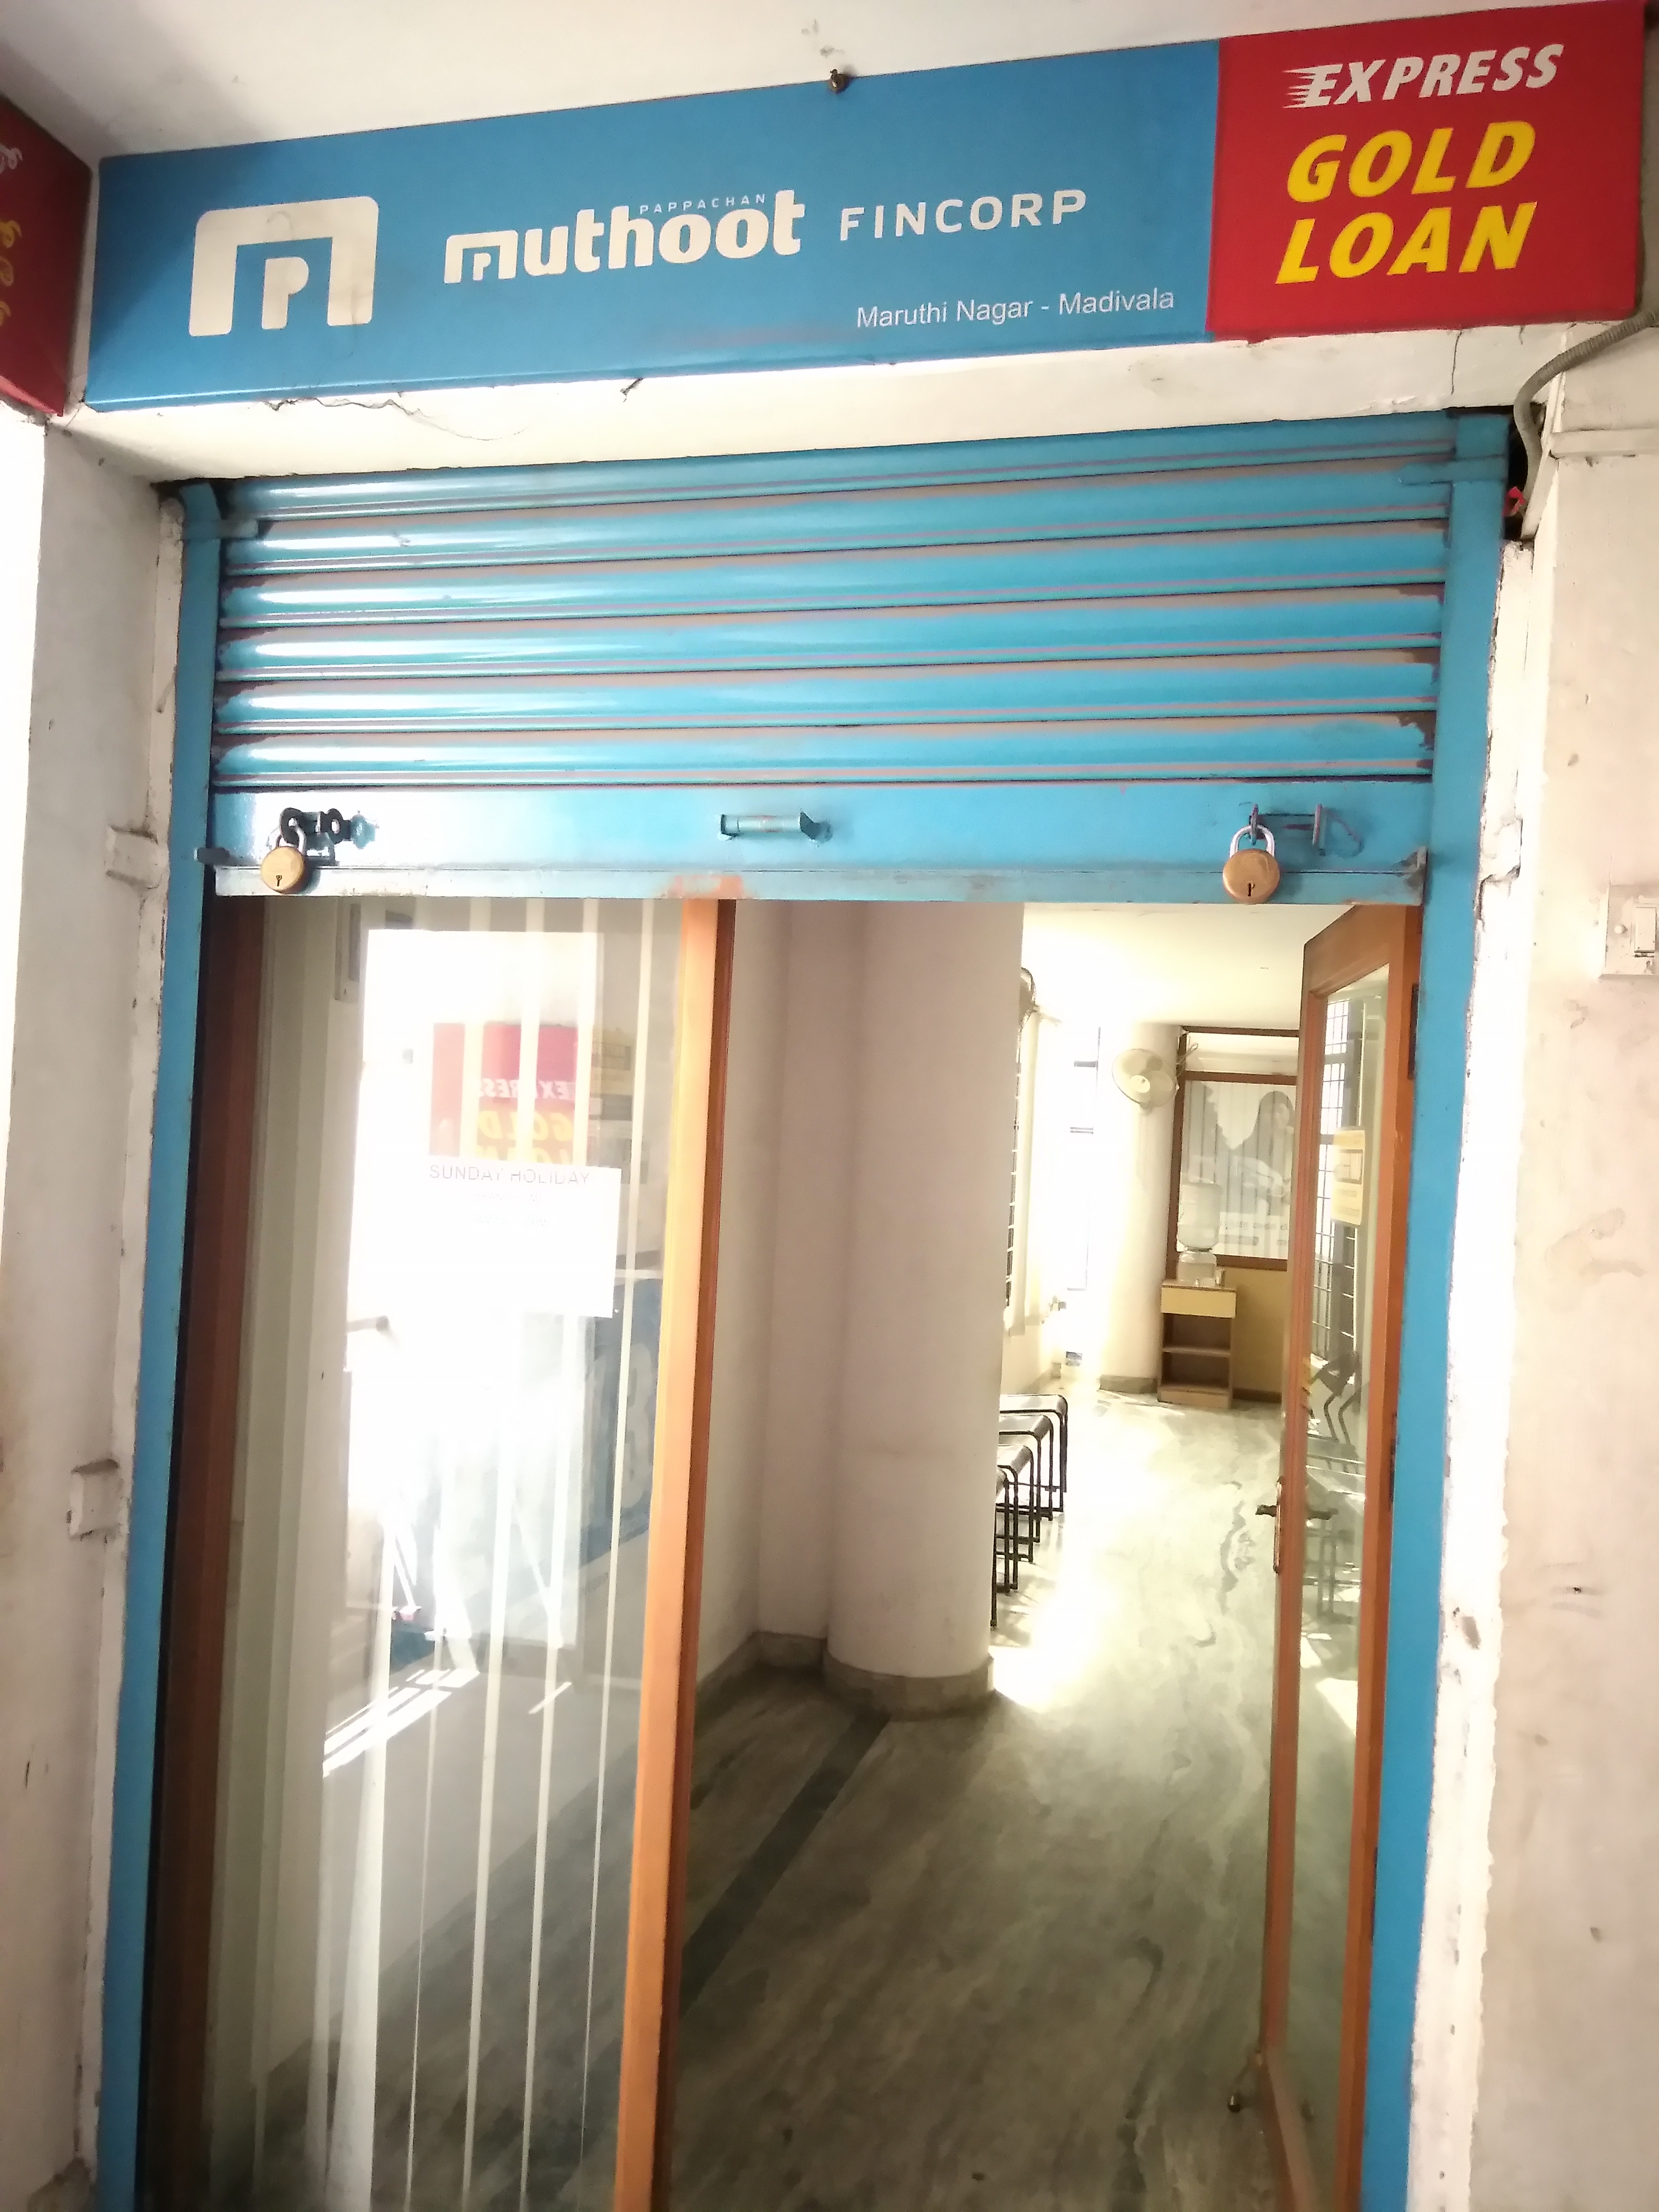 Muthoot Fincorp Gold Loan Services in Madiwala, Bengaluru, Karnataka